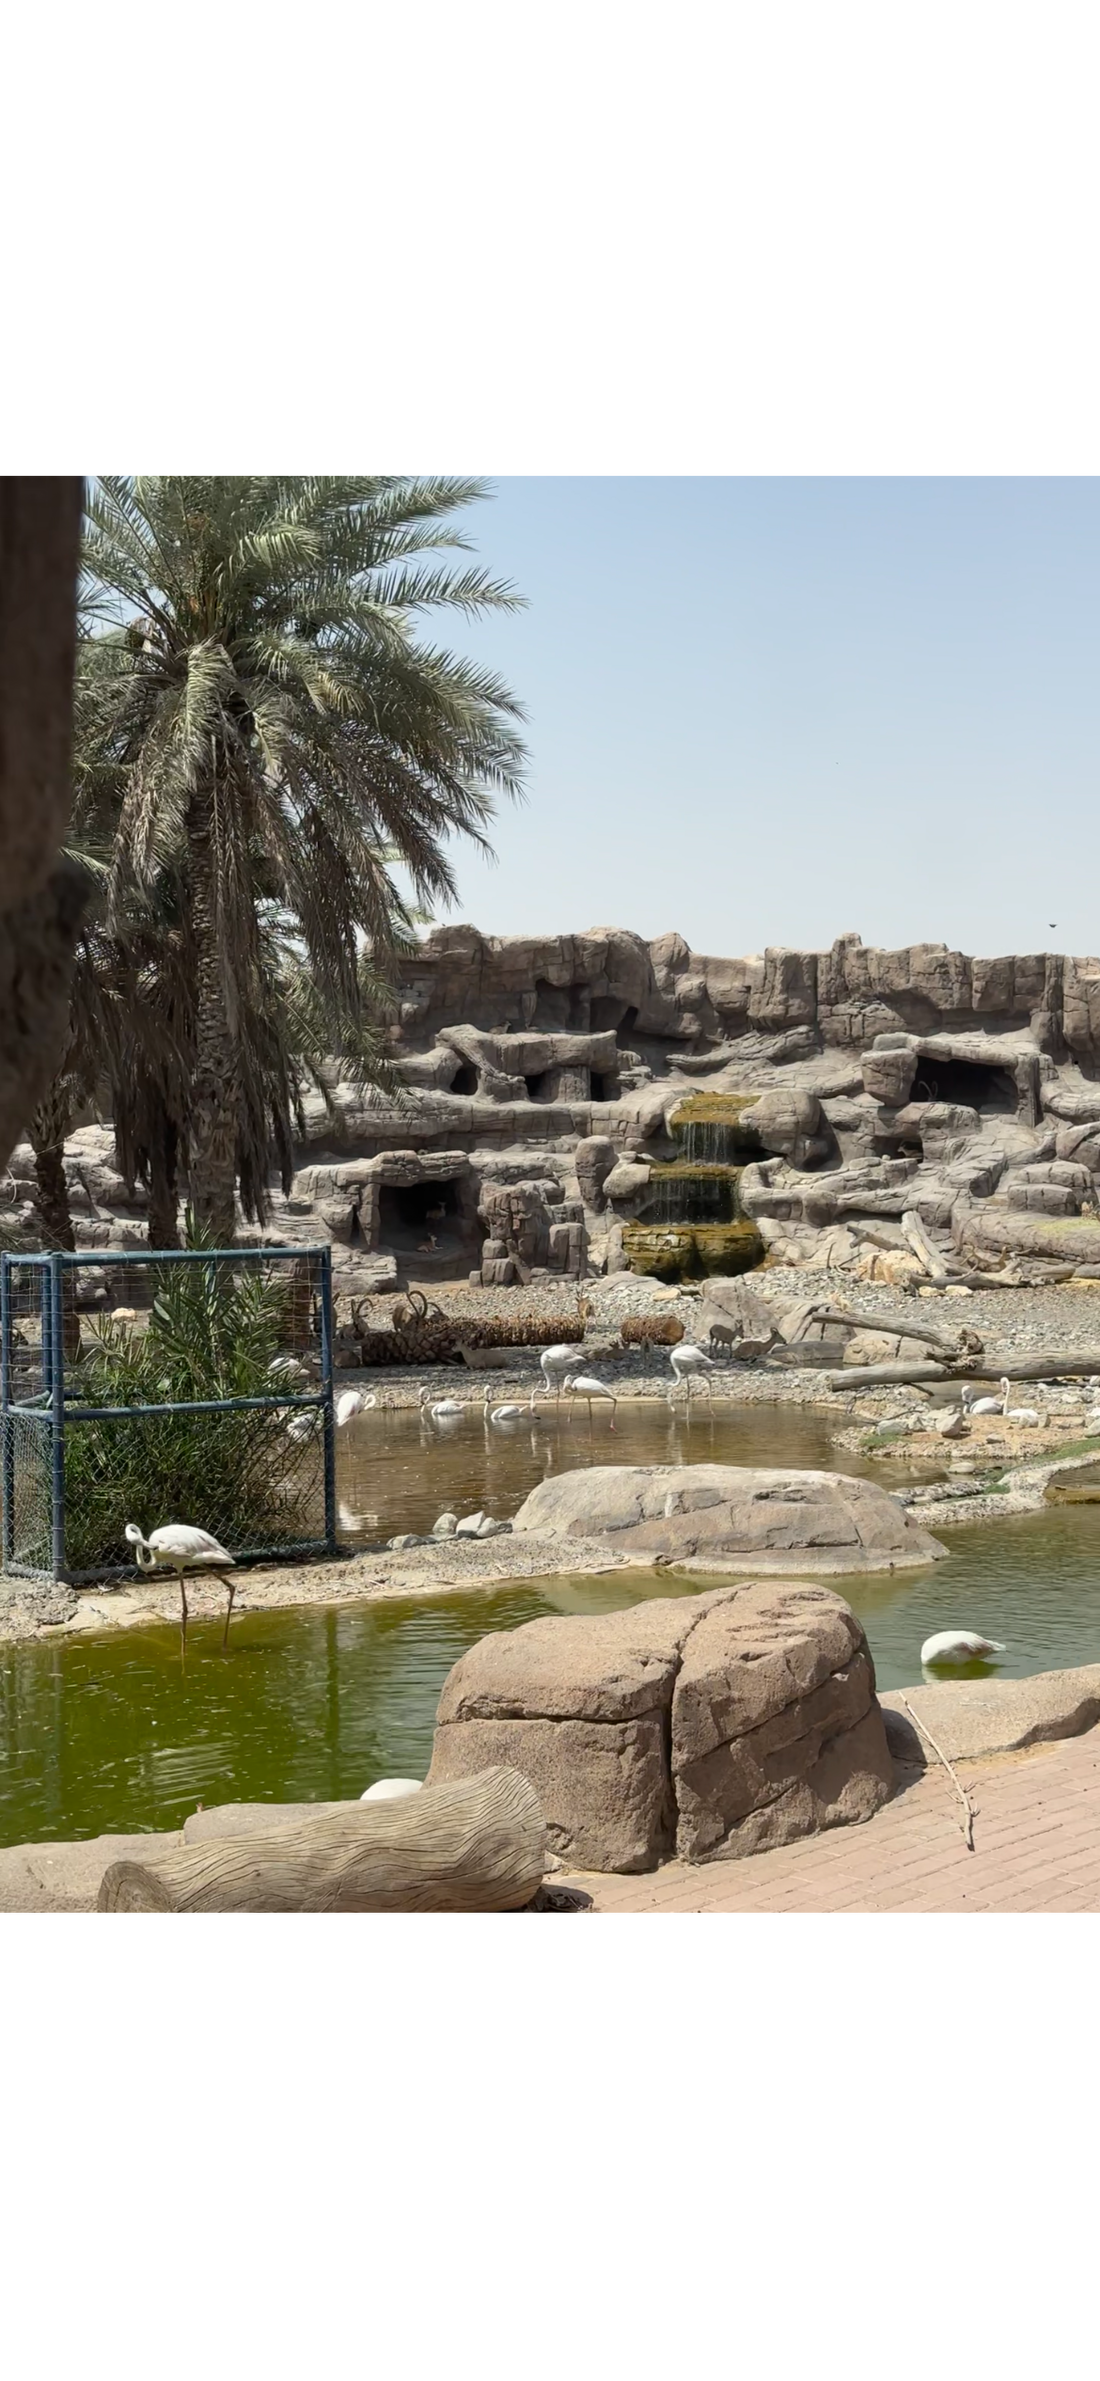 Sharjah Arabian Wildlife Center: Things To Do During Summer, UAE